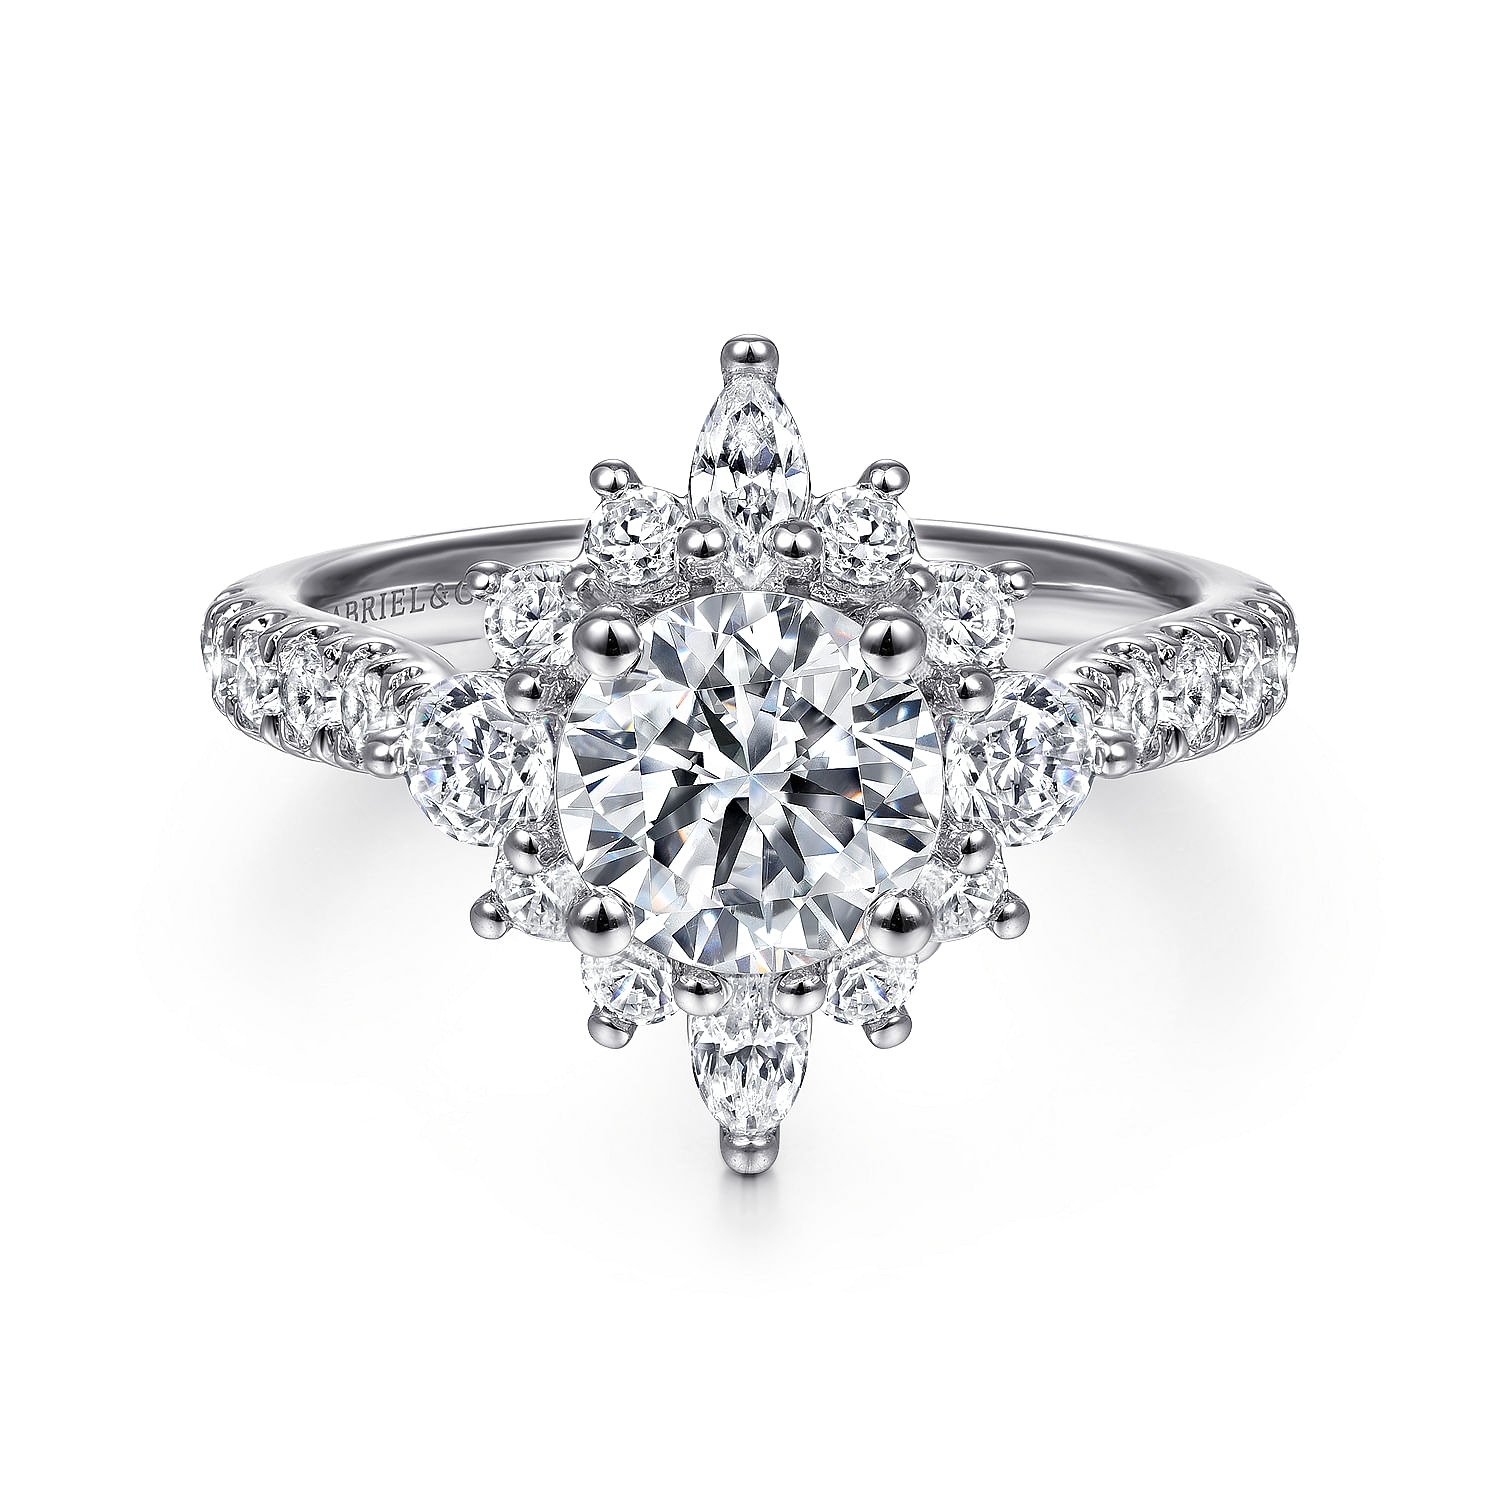 Astor---Unique-14K-White-Gold-Round-Halo-Diamond-Engagement-Ring1